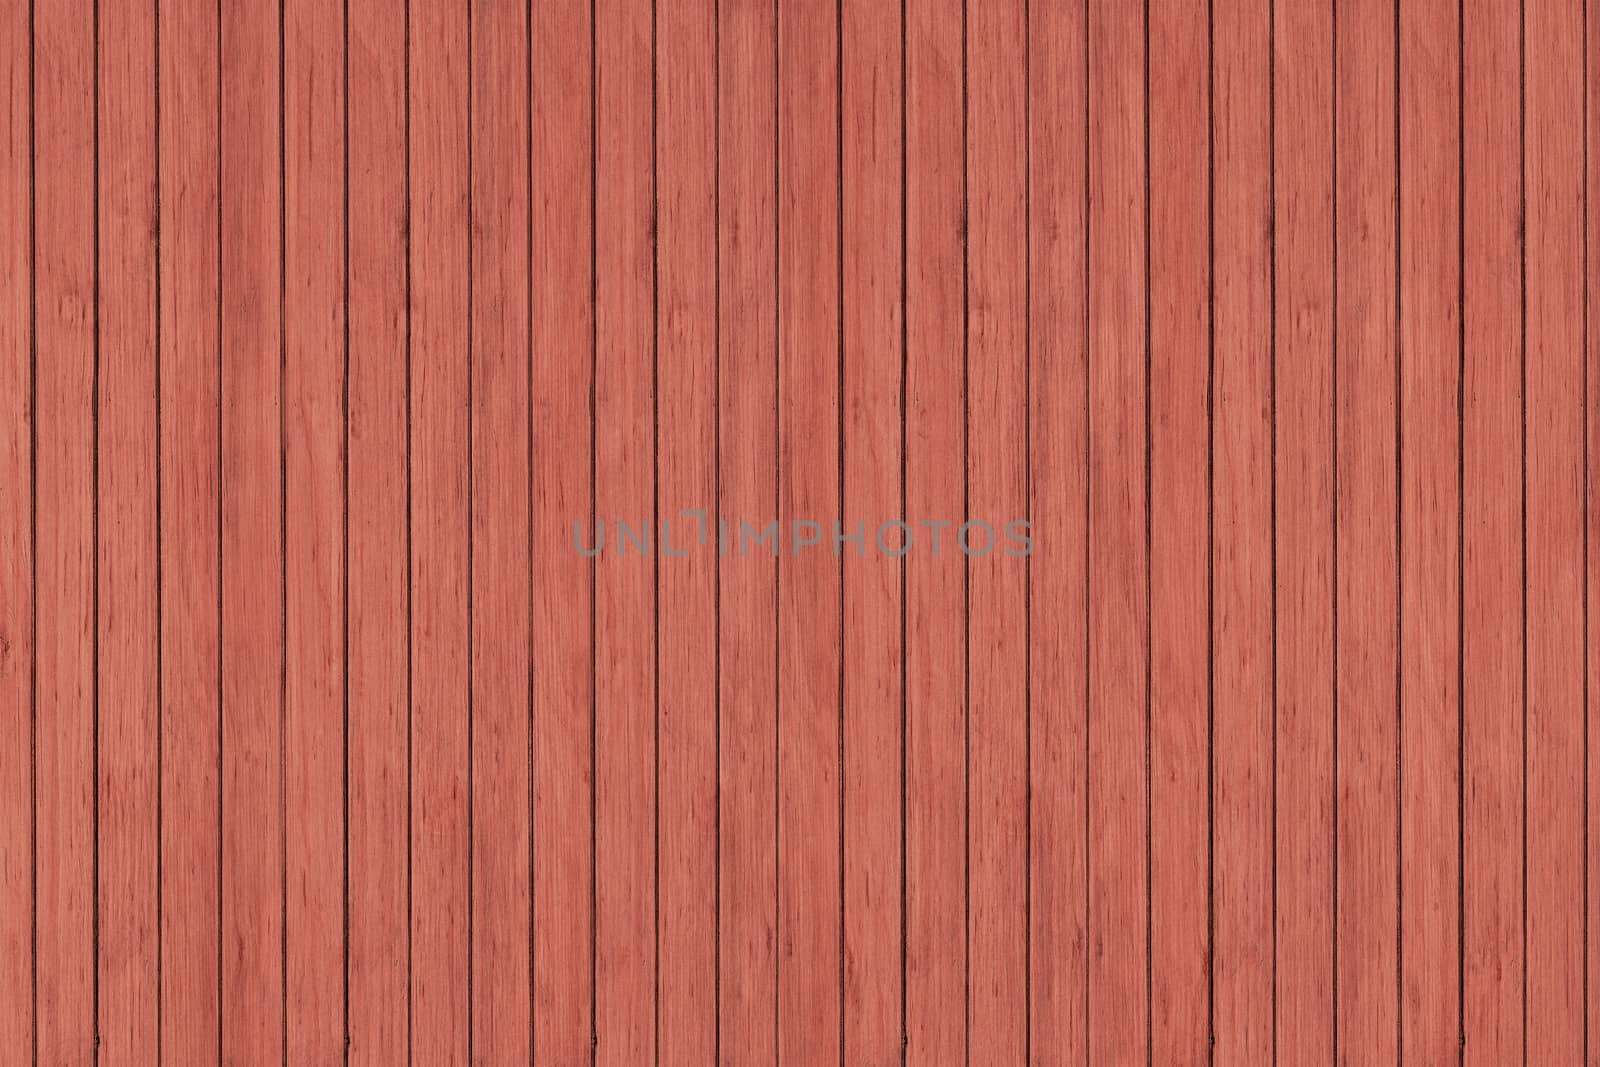 red grunge wood pattern texture background, wooden planks